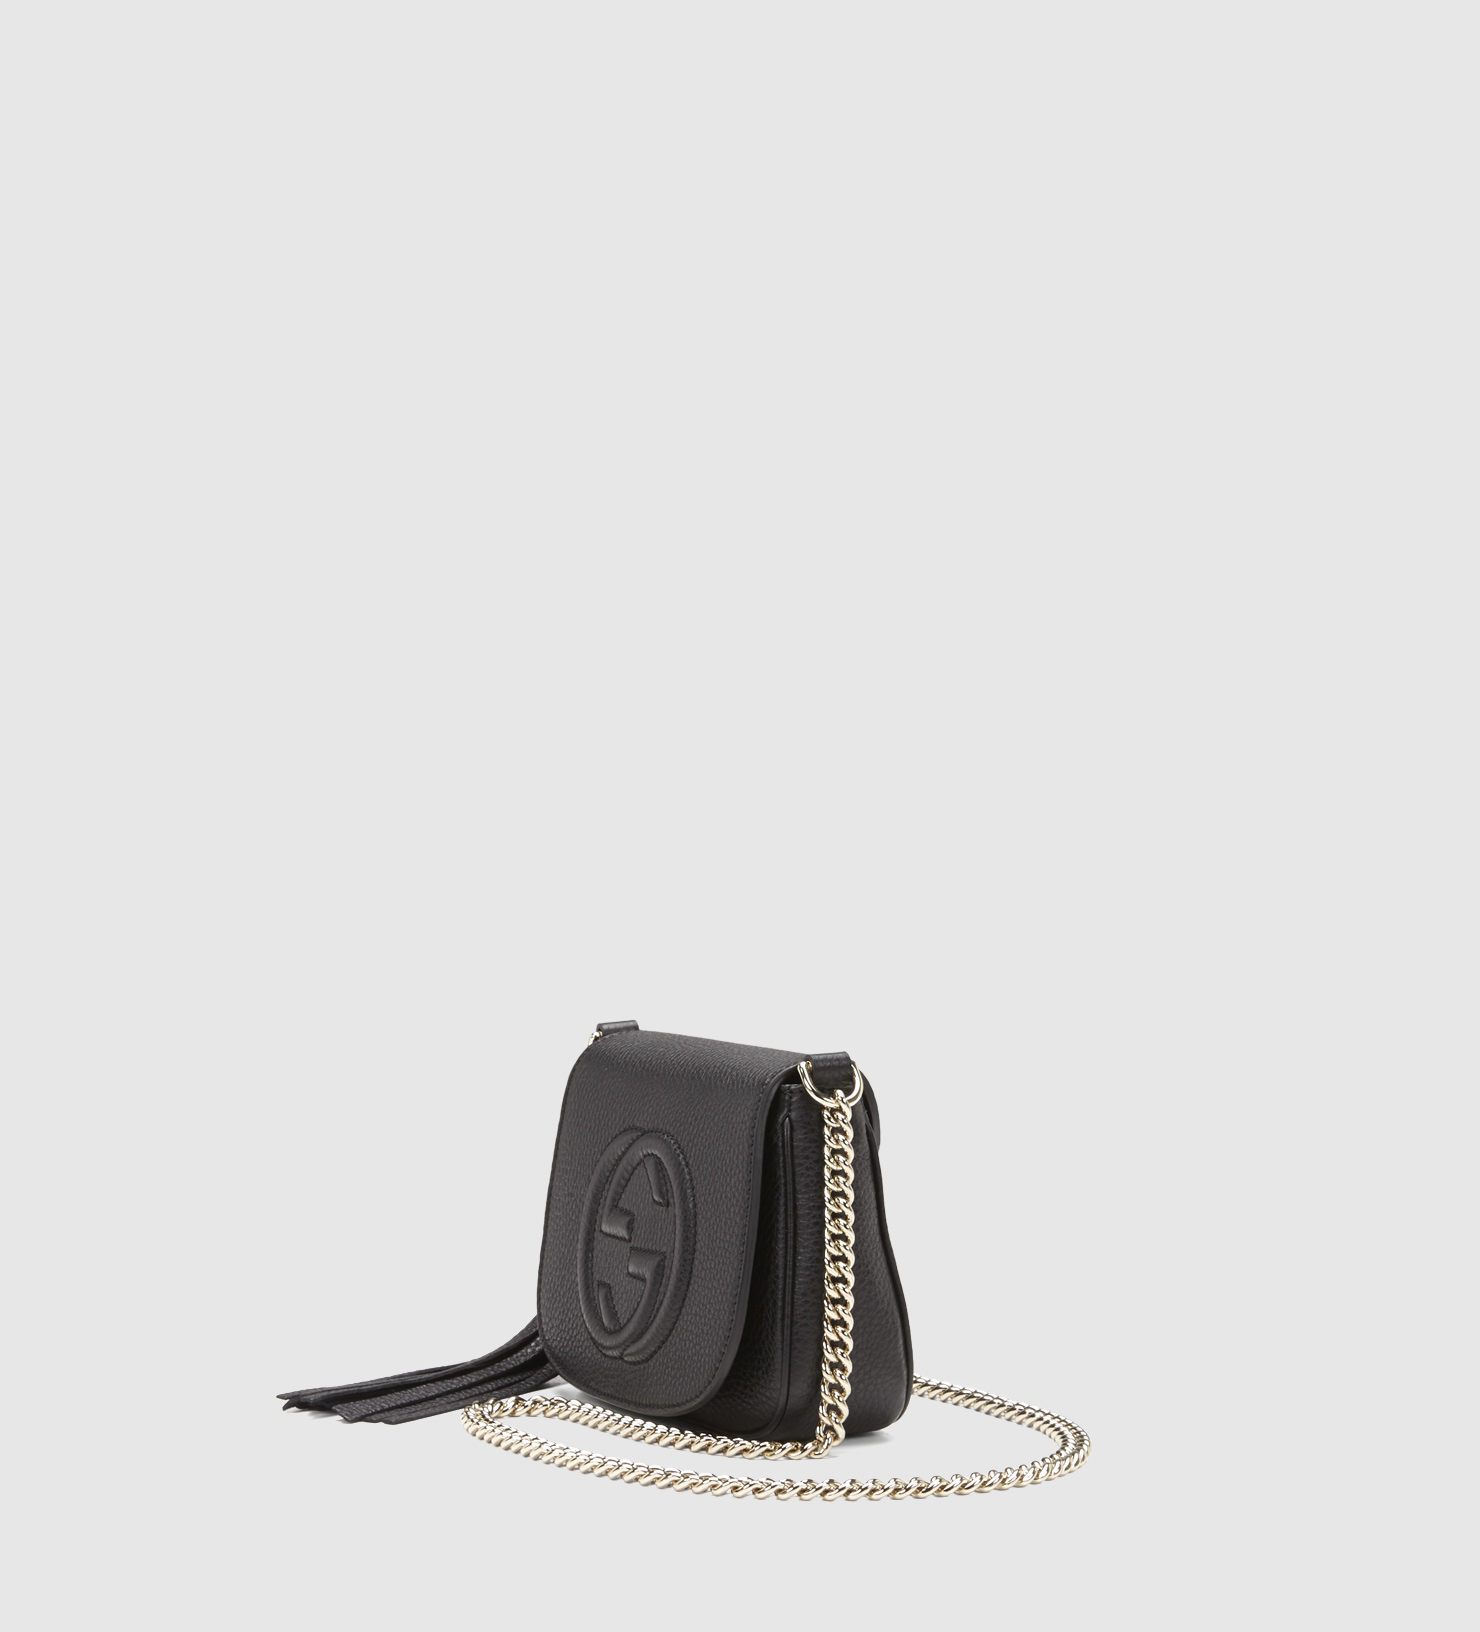 Lyst - Gucci Soho Gg Leather Cross-body Bag in Black